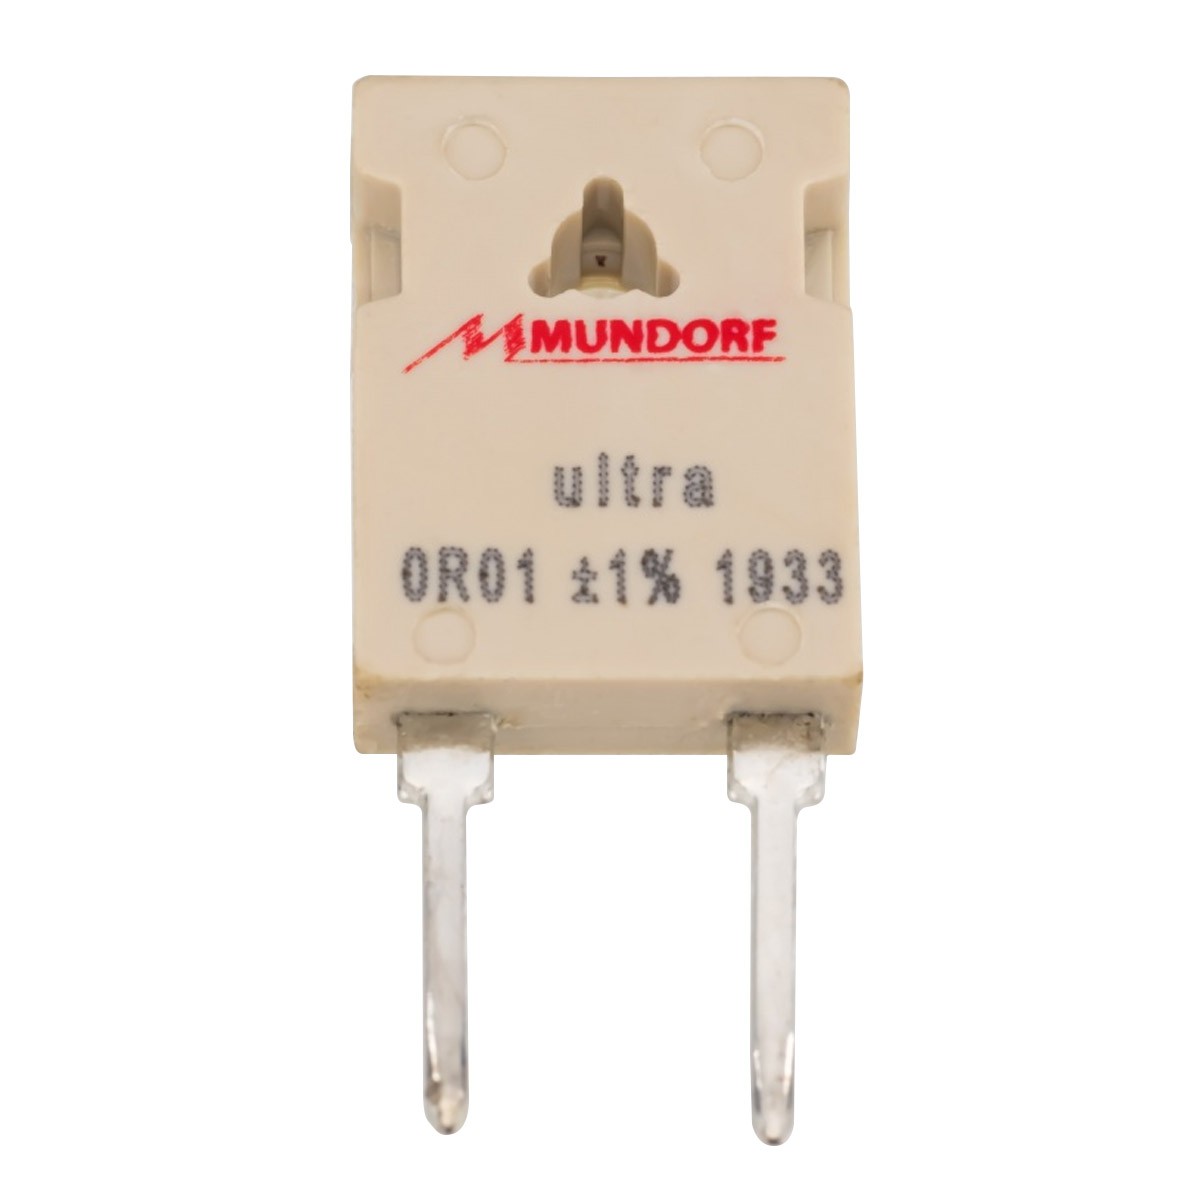 MUNDORF MRESIST ULTRA Resistor 30W 8.2 Ohm